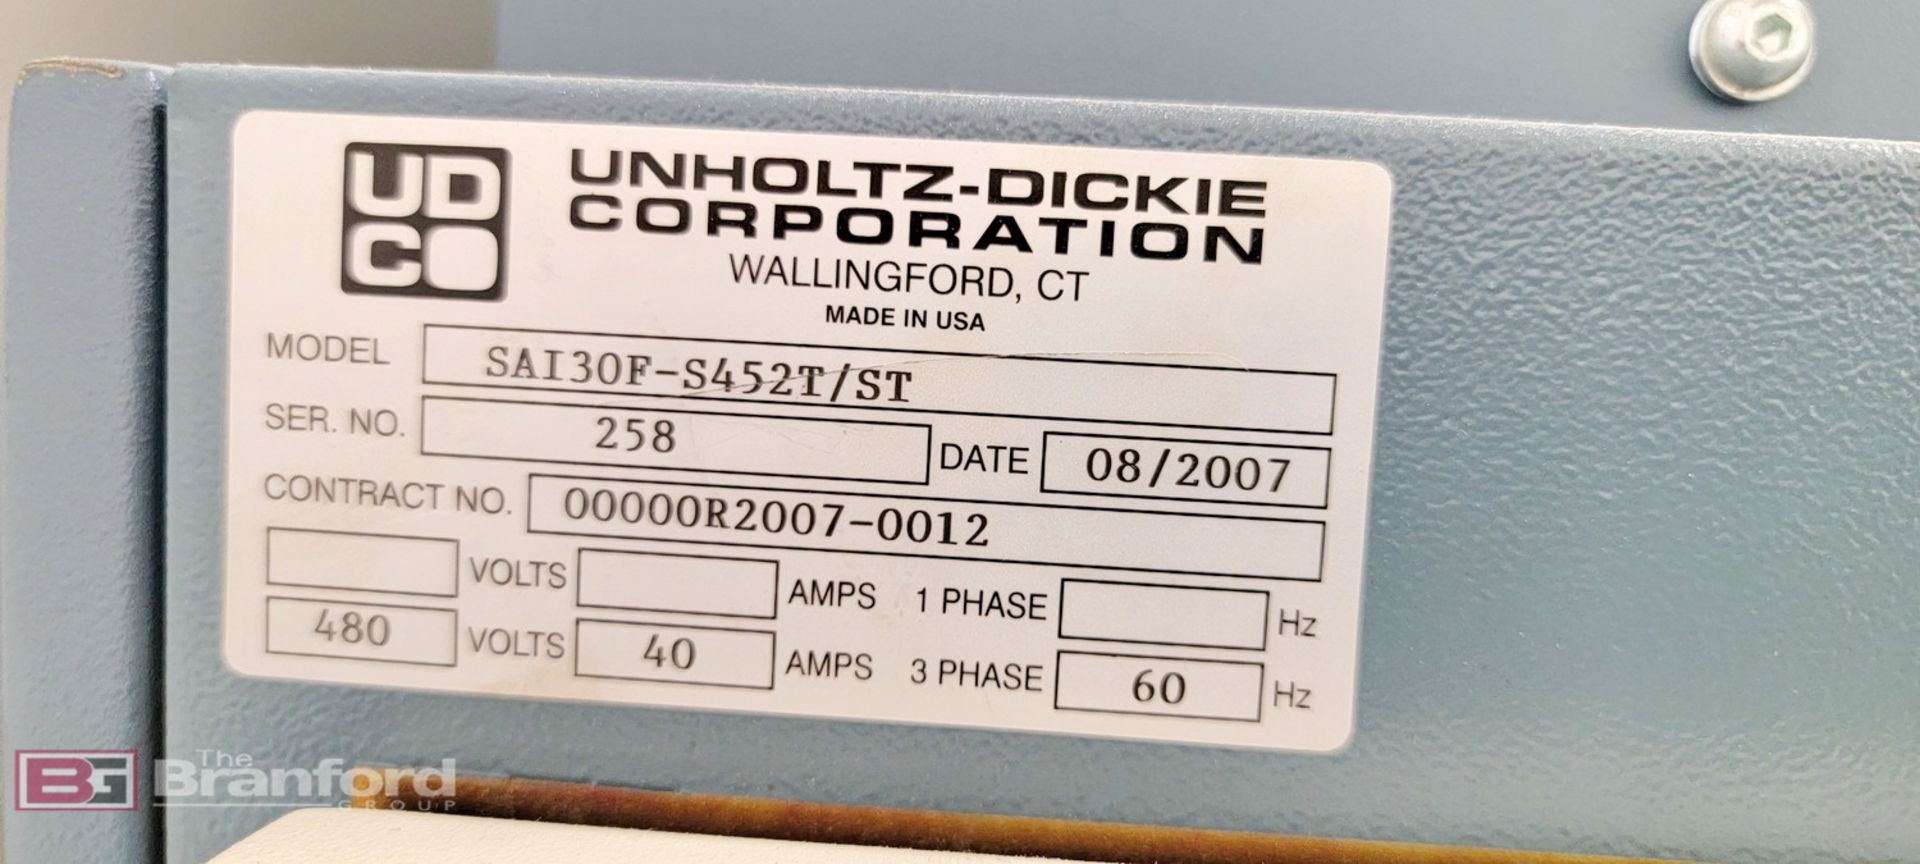 Unholtz-Dickie (UDC) S452 electrodynamic shaker system - Image 9 of 10